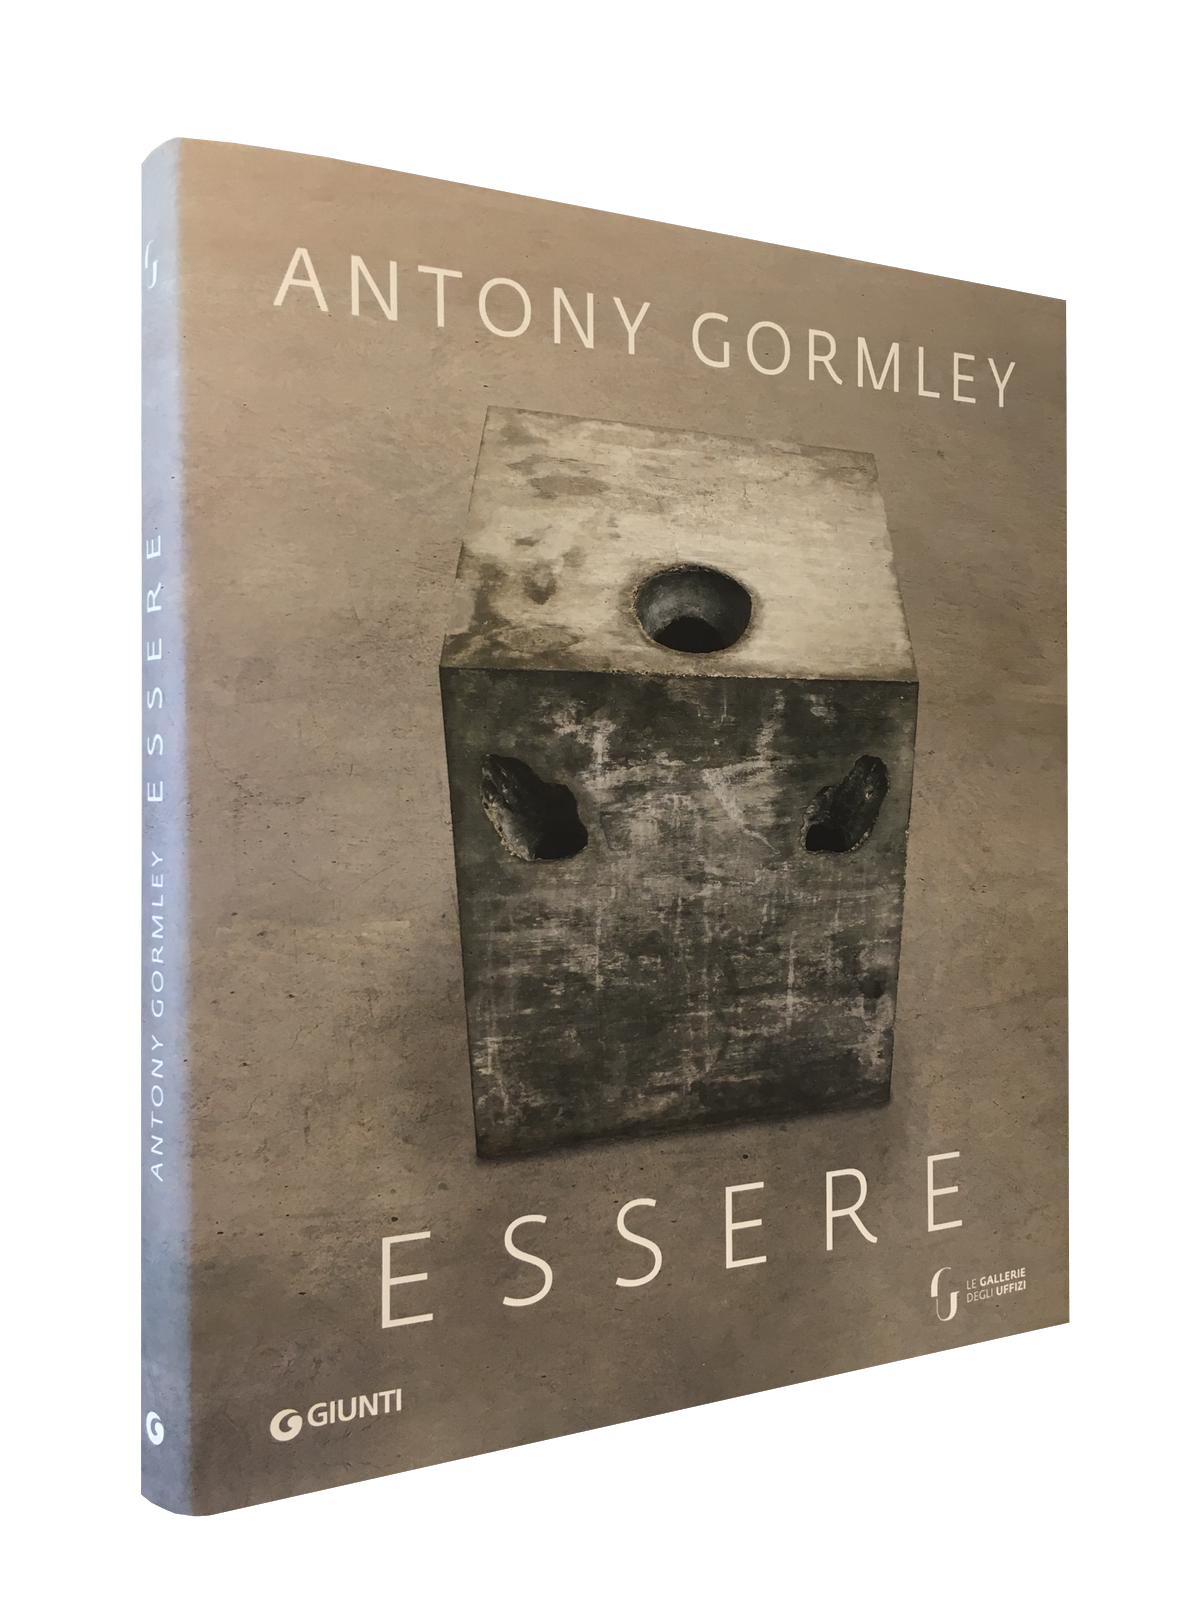 Galleria Continua - Antony Gormley. ESSERE, 2019